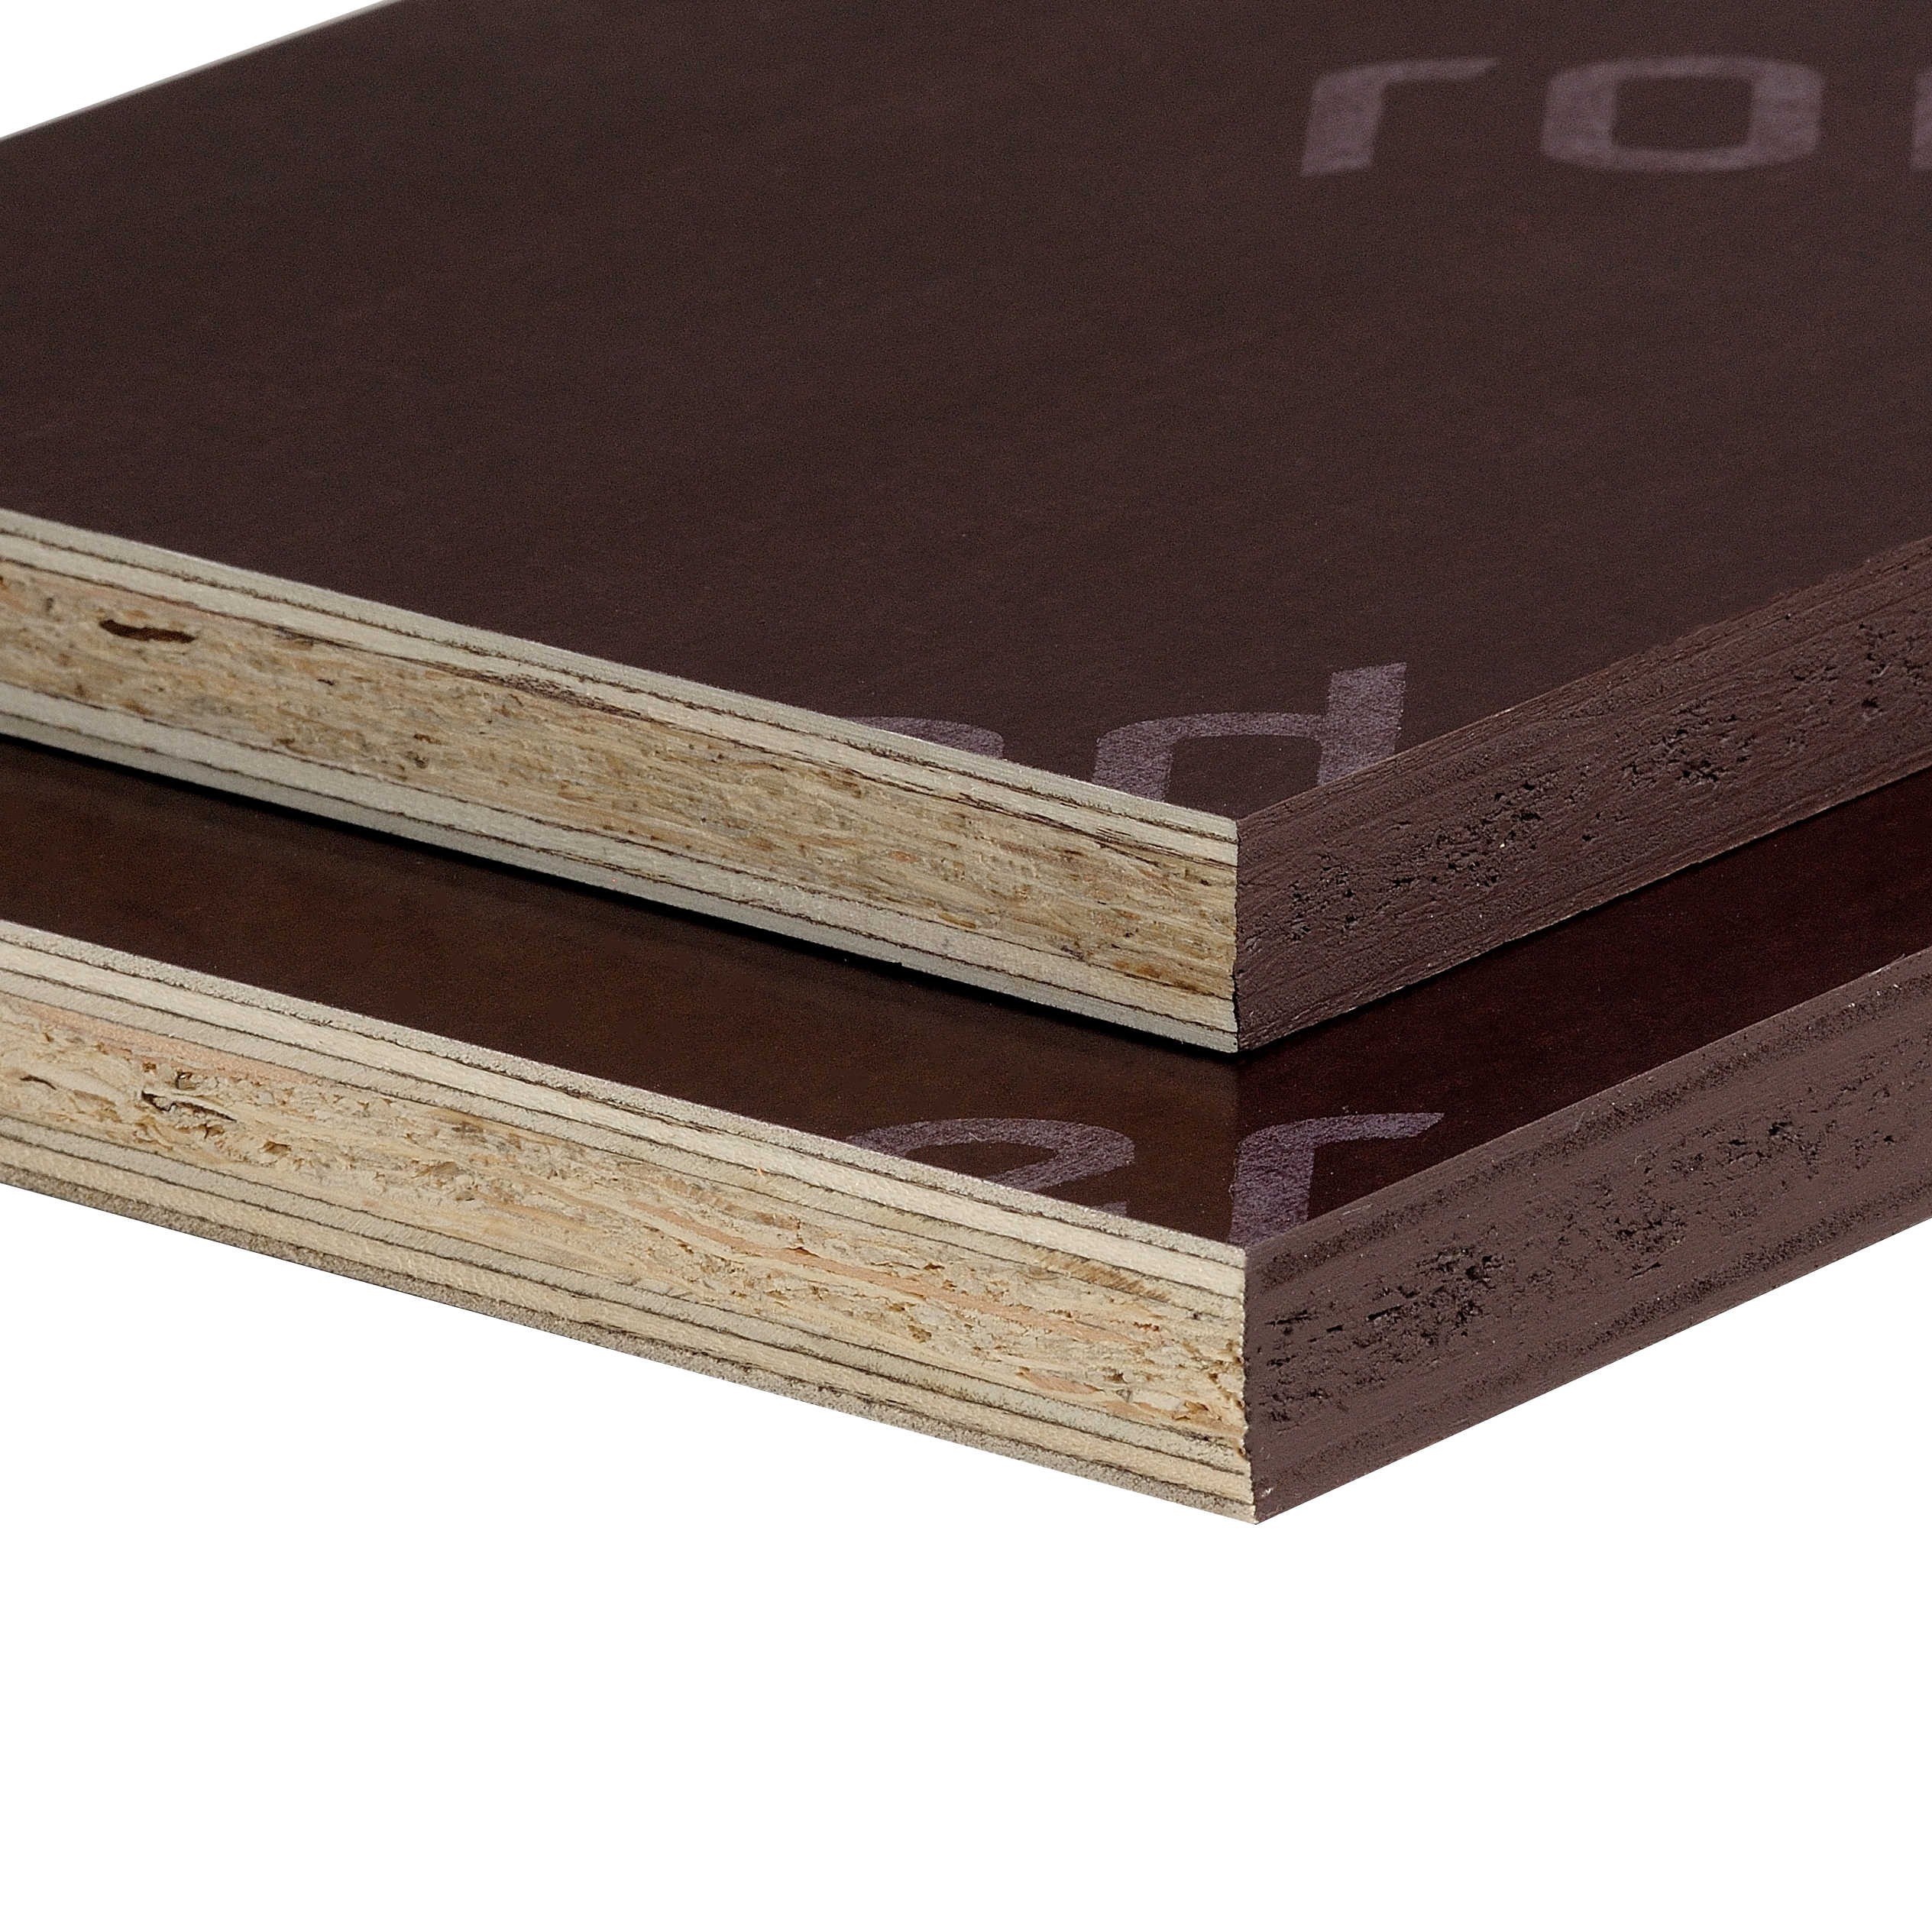 Plywood - TEGO formwork plywood 18 mm thickness, 1220 x 2440 mm class B, https:maxbau.ro